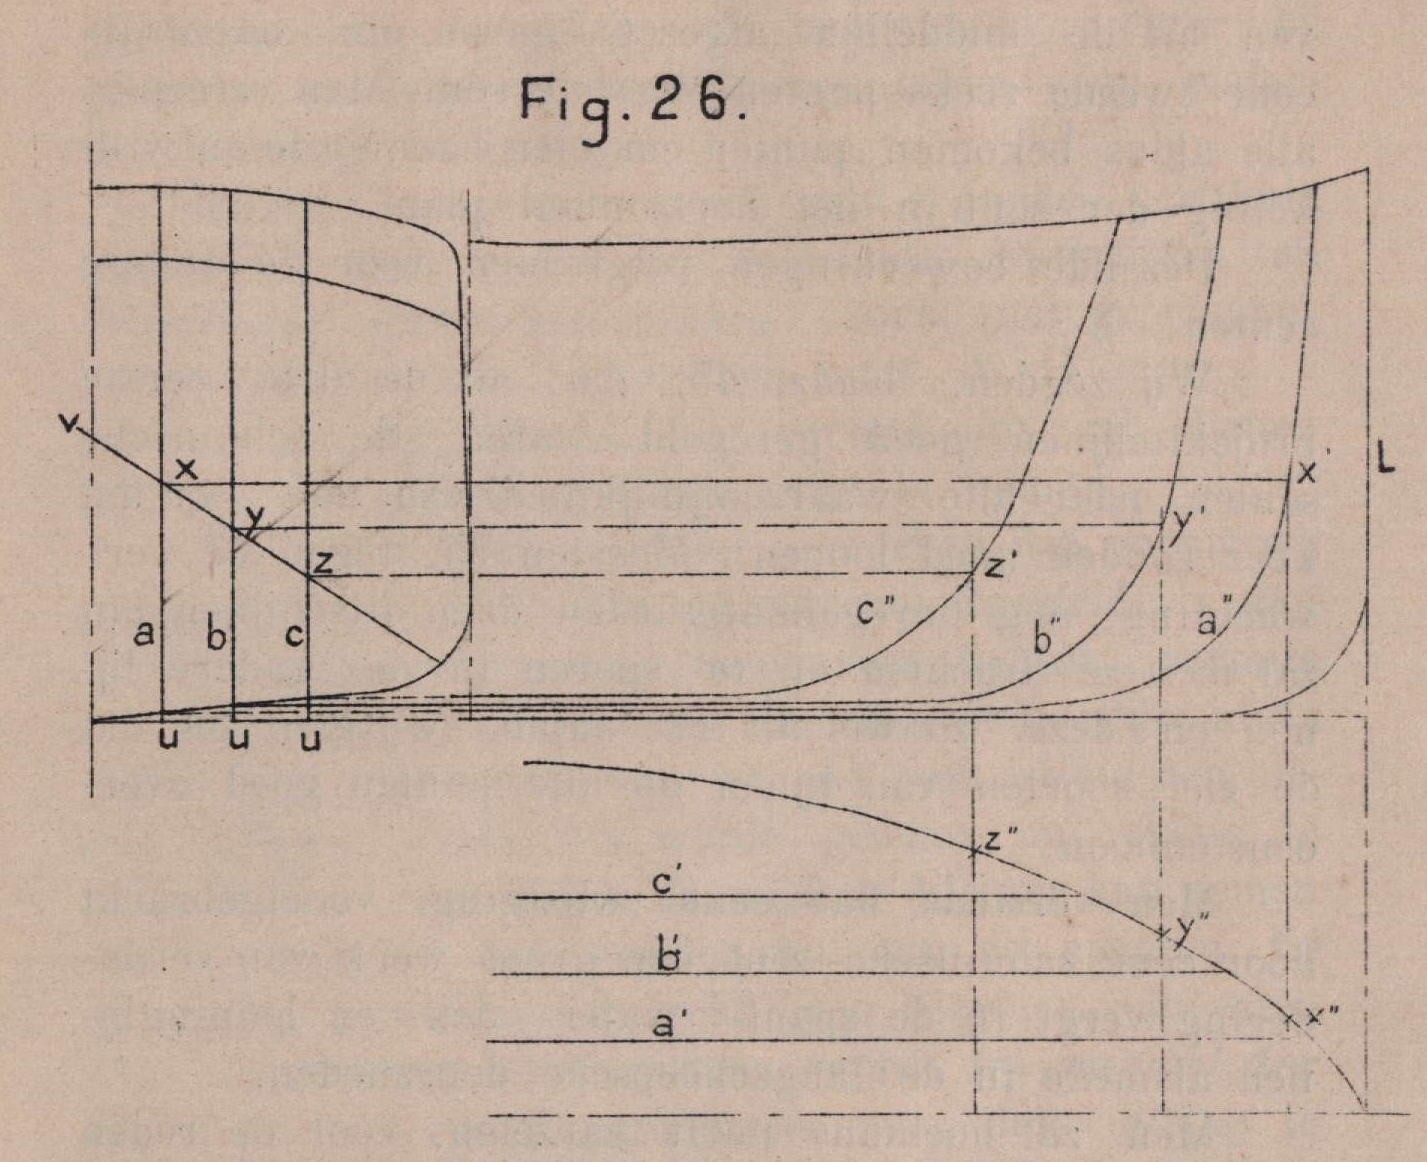 De Borger (1901, fig. 26)